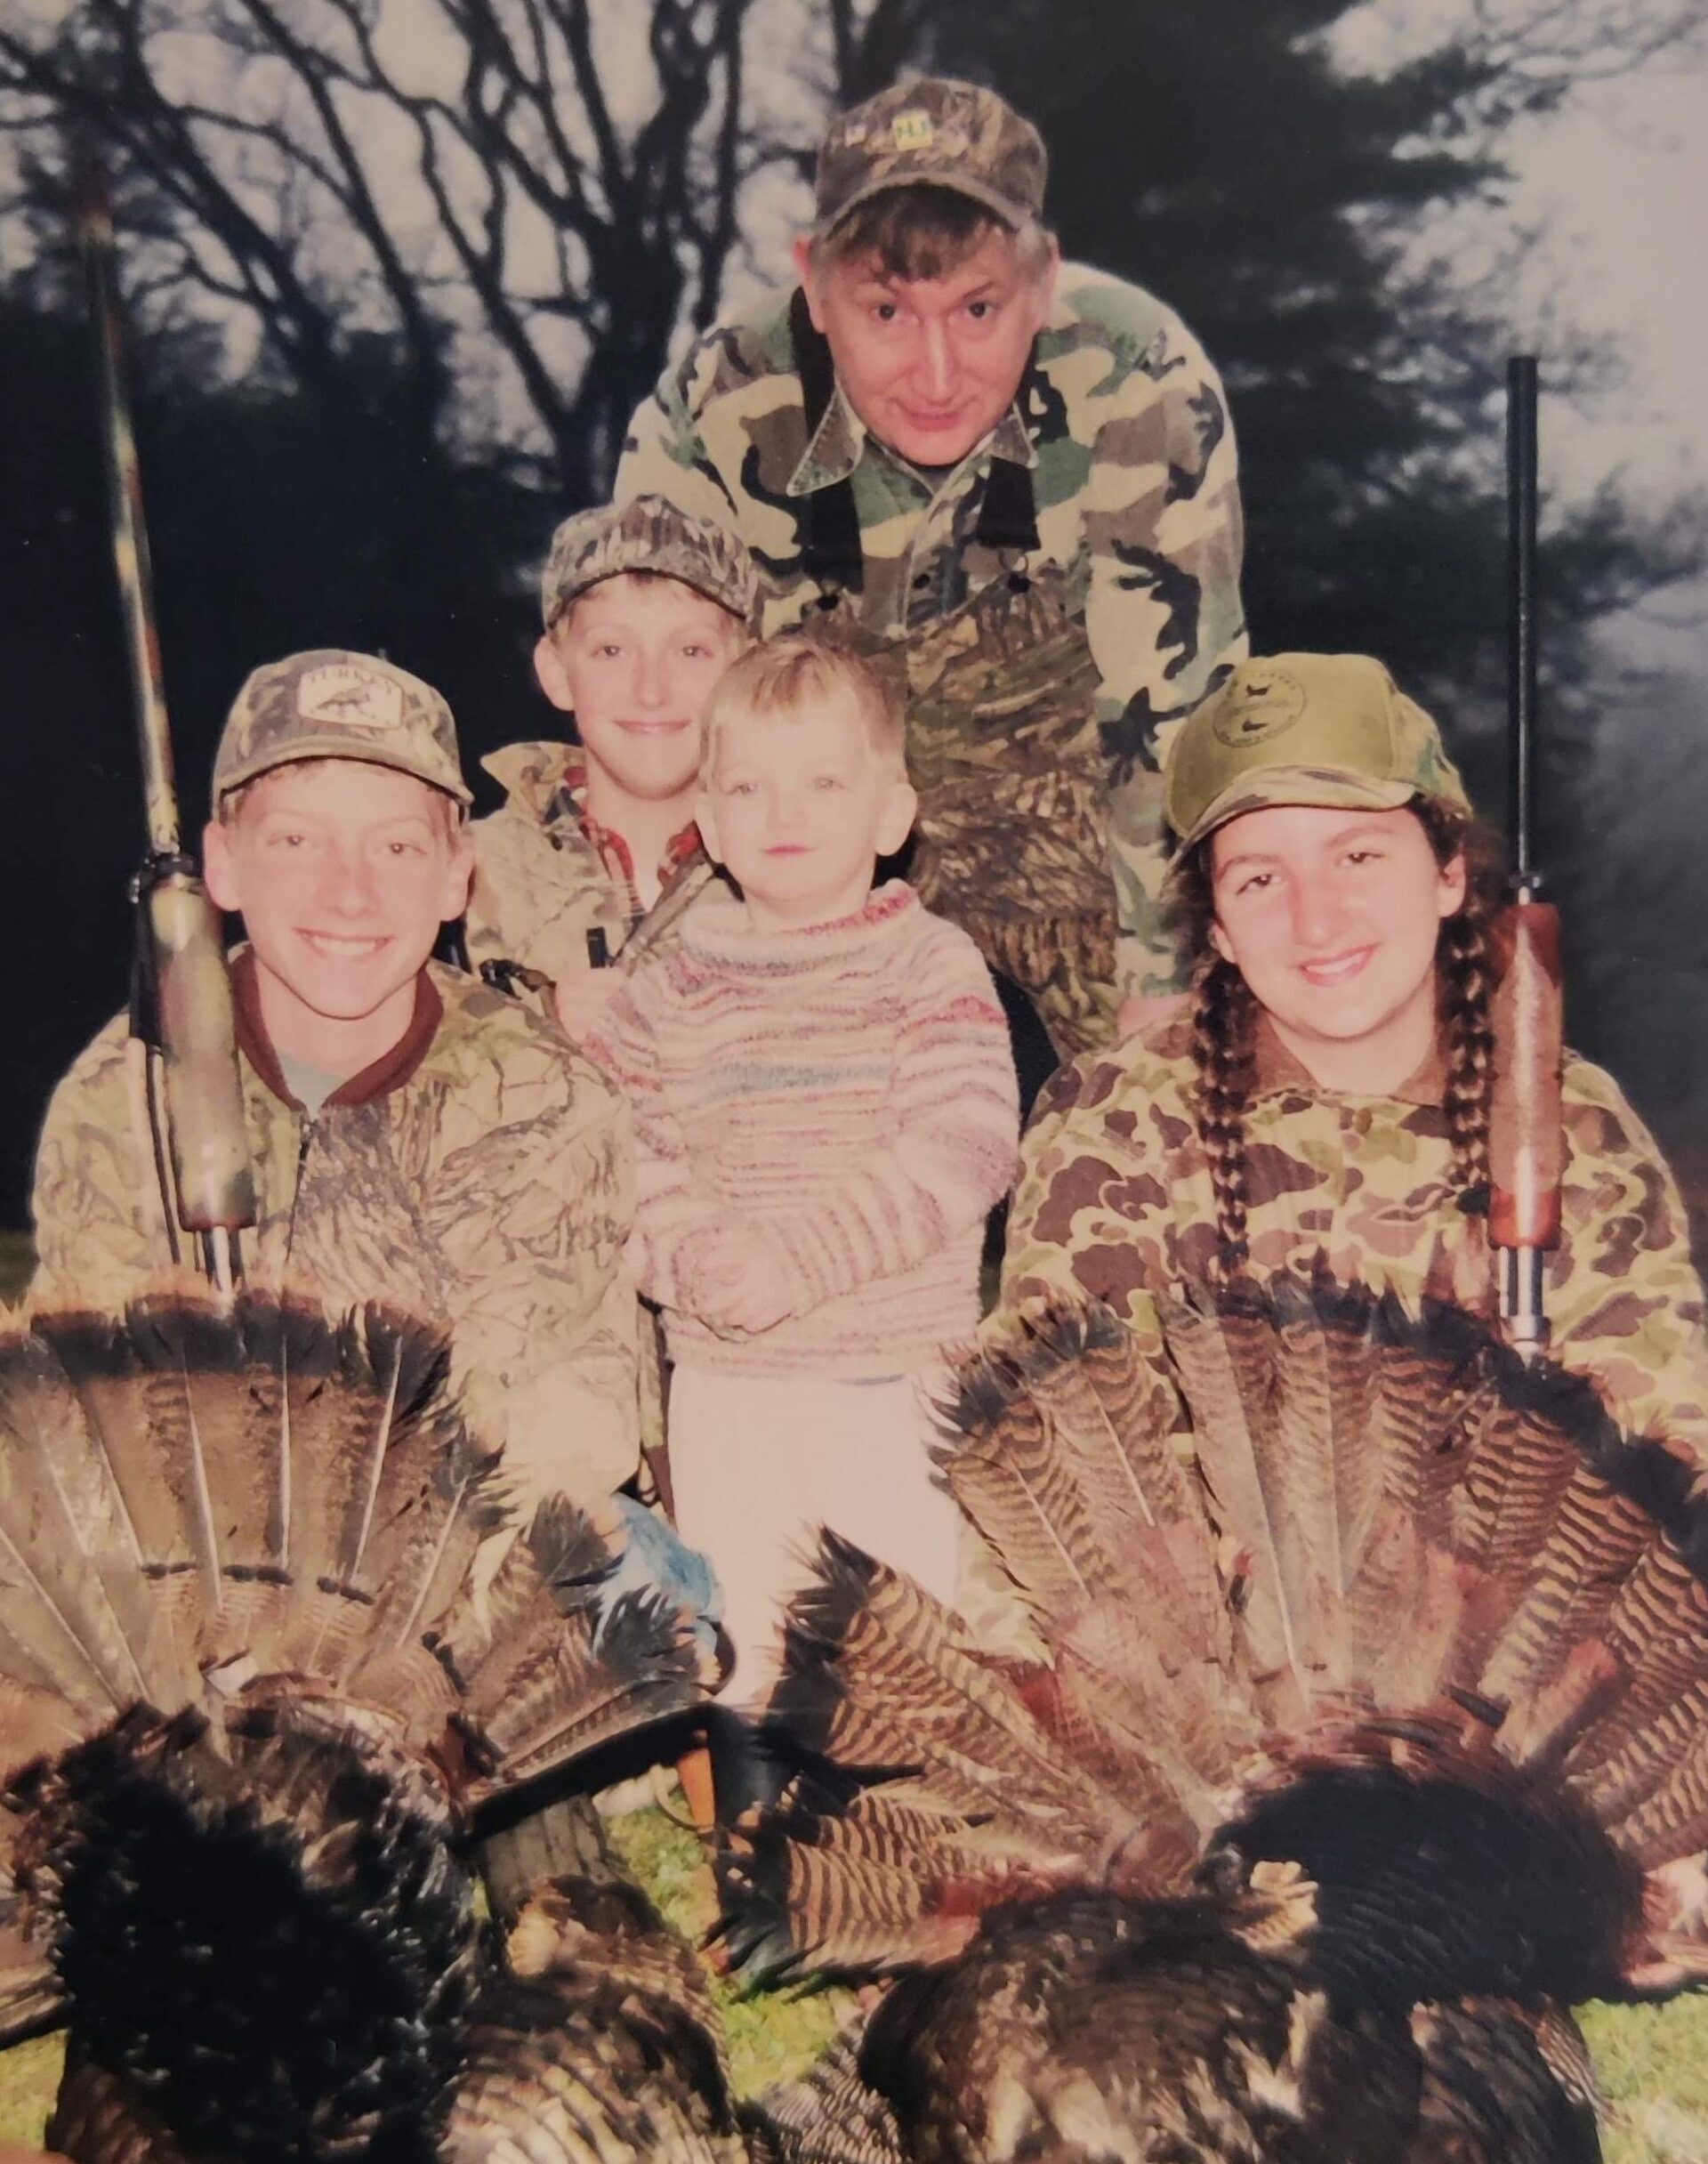 A vintage photo of a family turkey hunt.